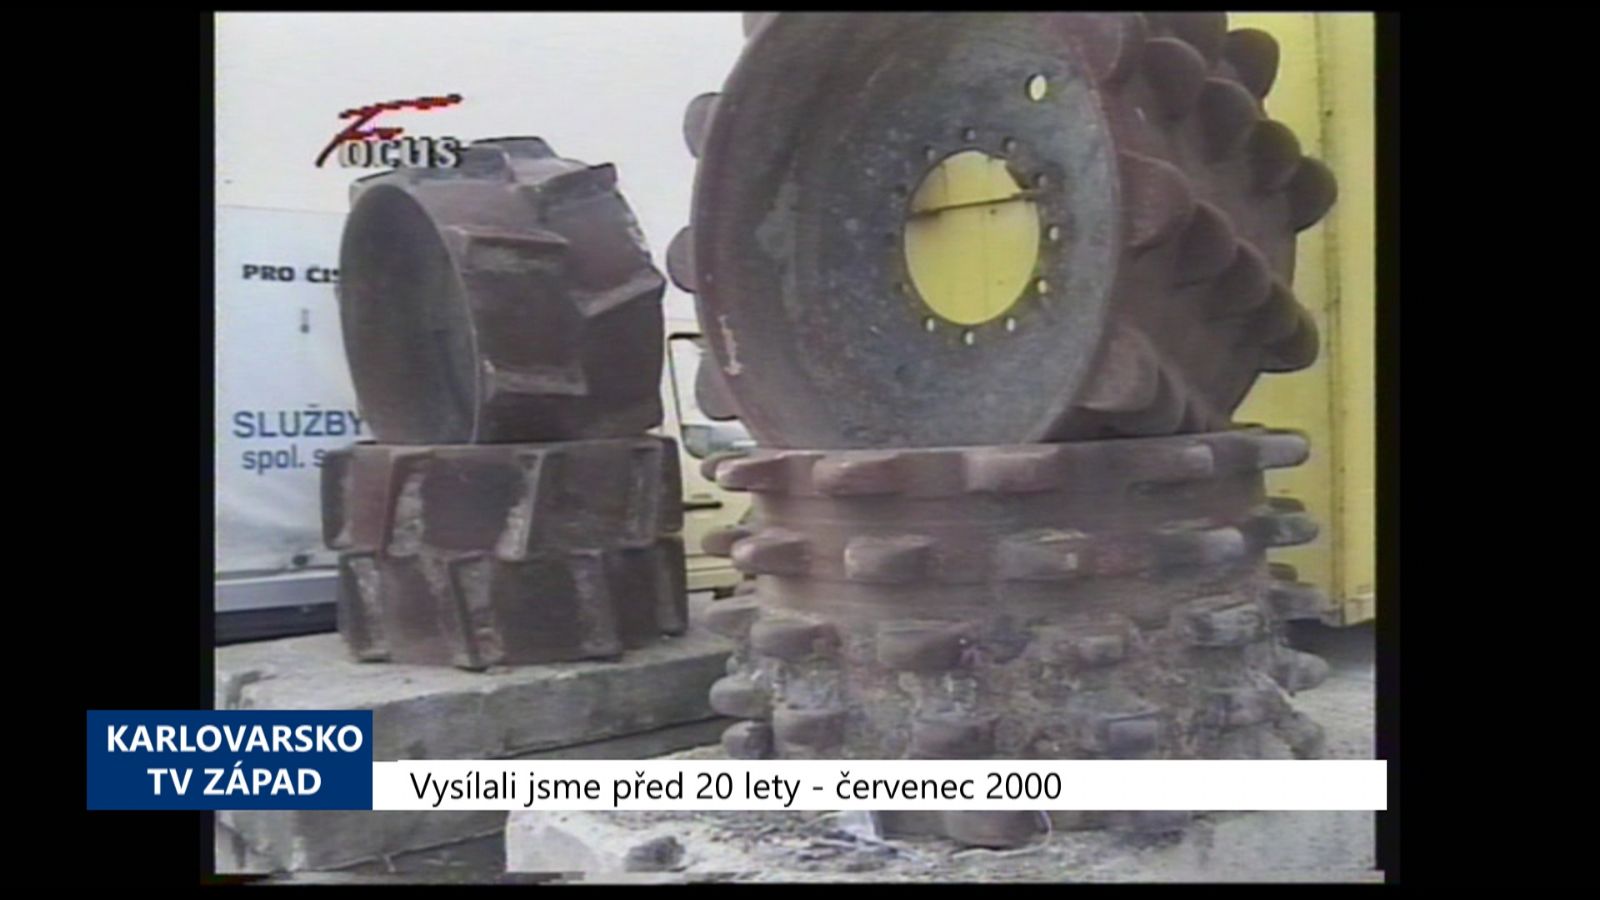 2000 – Chebsko: V okrese stále nefunguje řízená skládka odpadu (TV Západ)